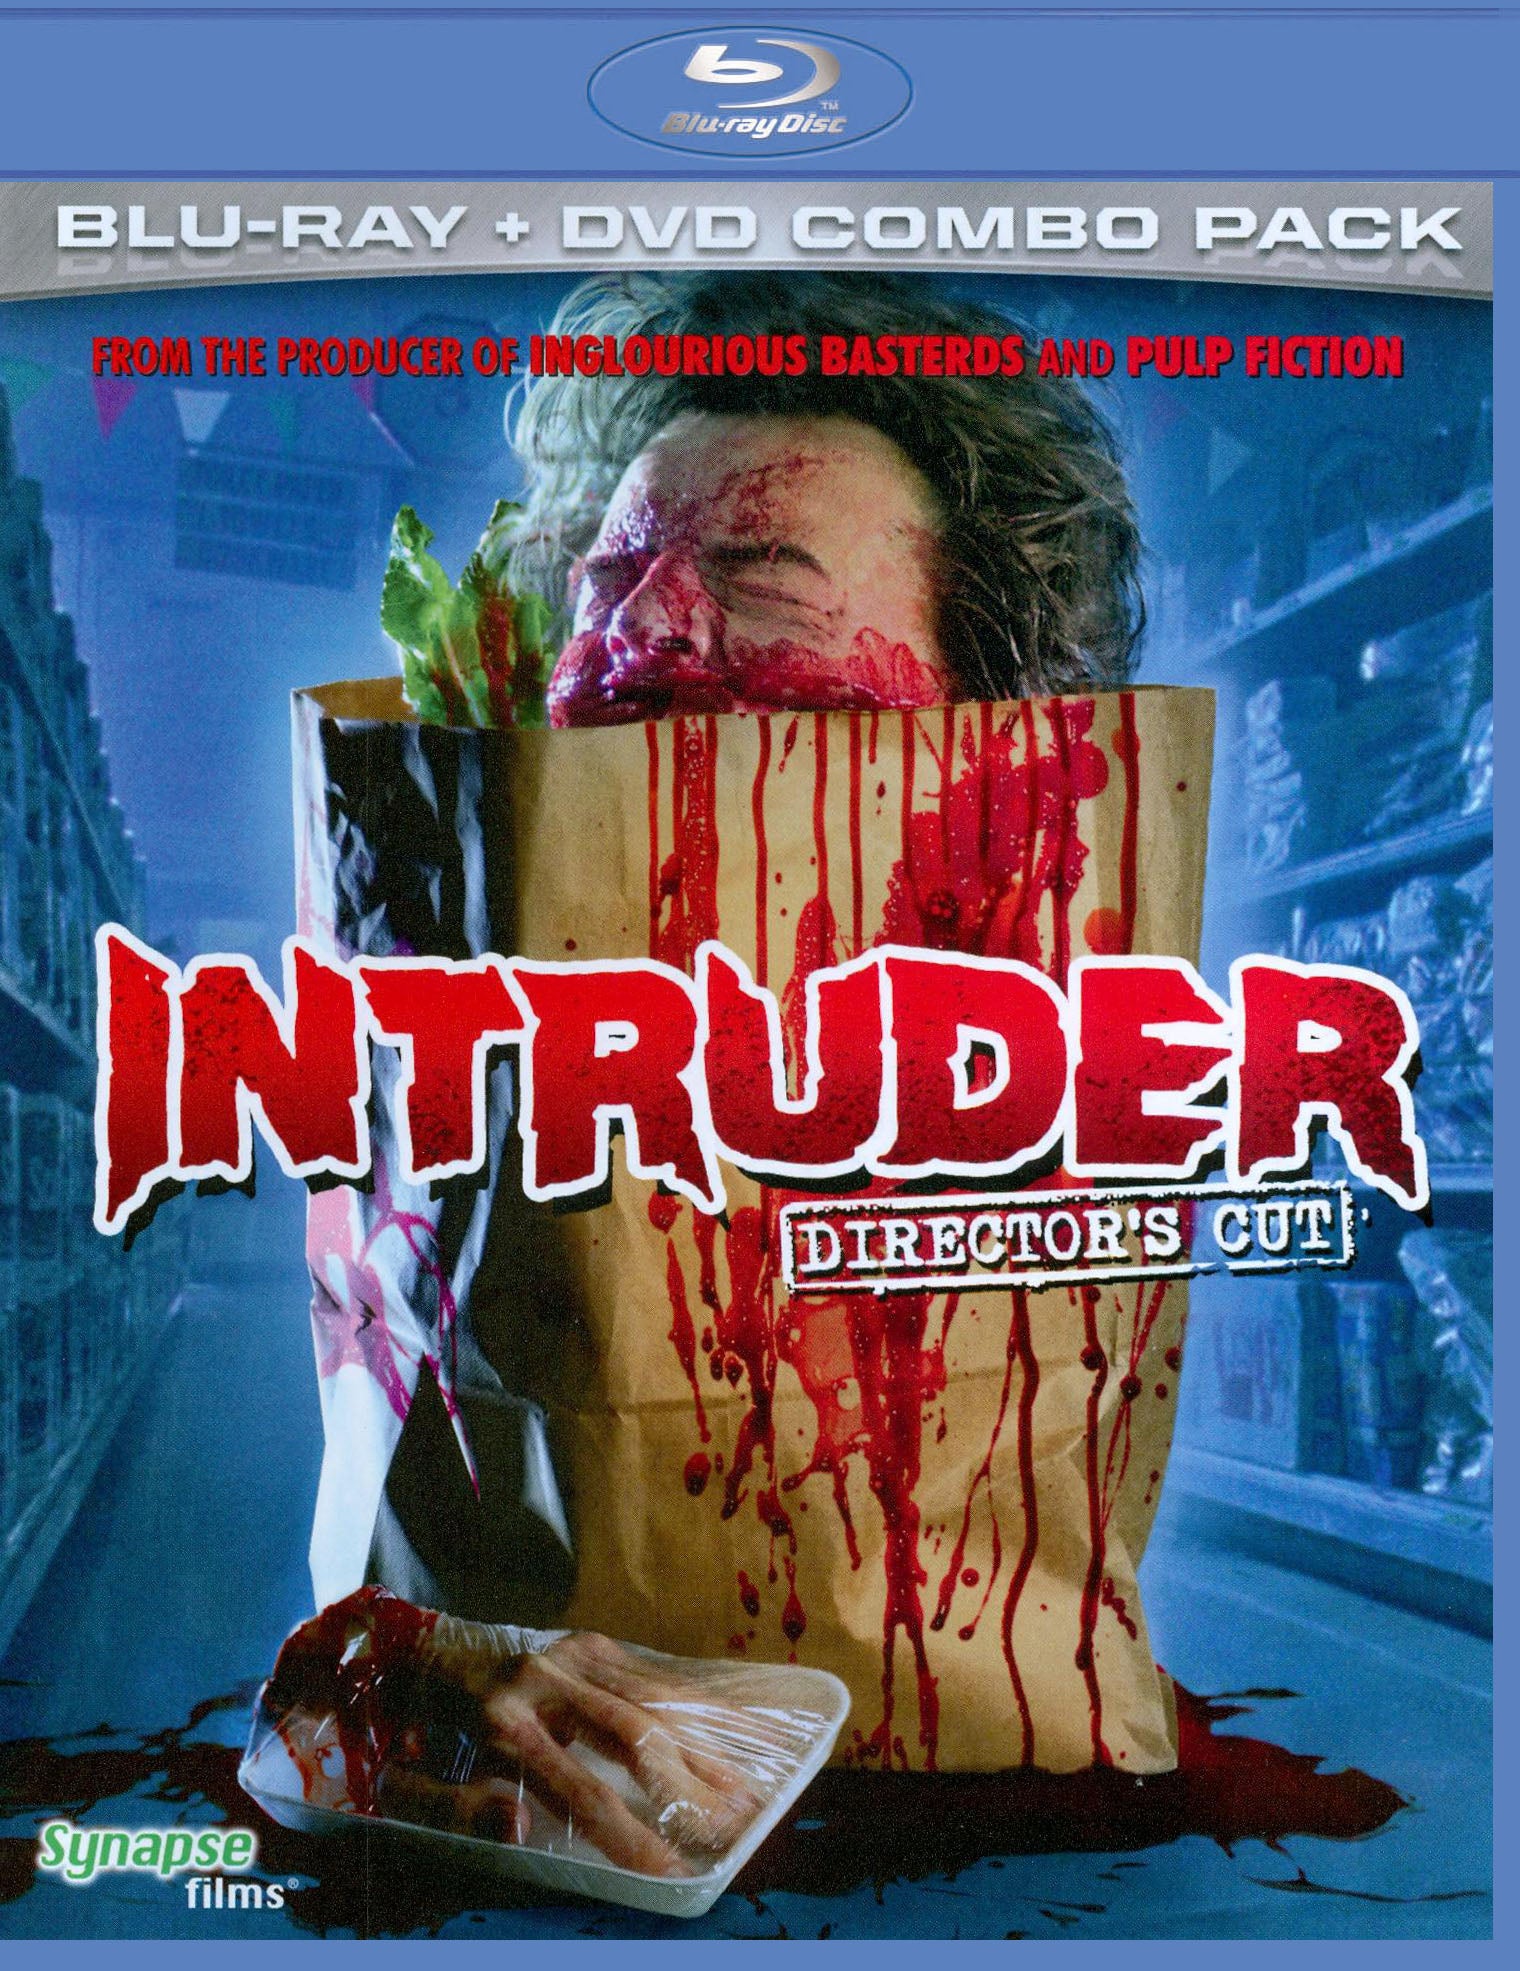 INTRUDER (DIRECTOR'S CUT) cover art